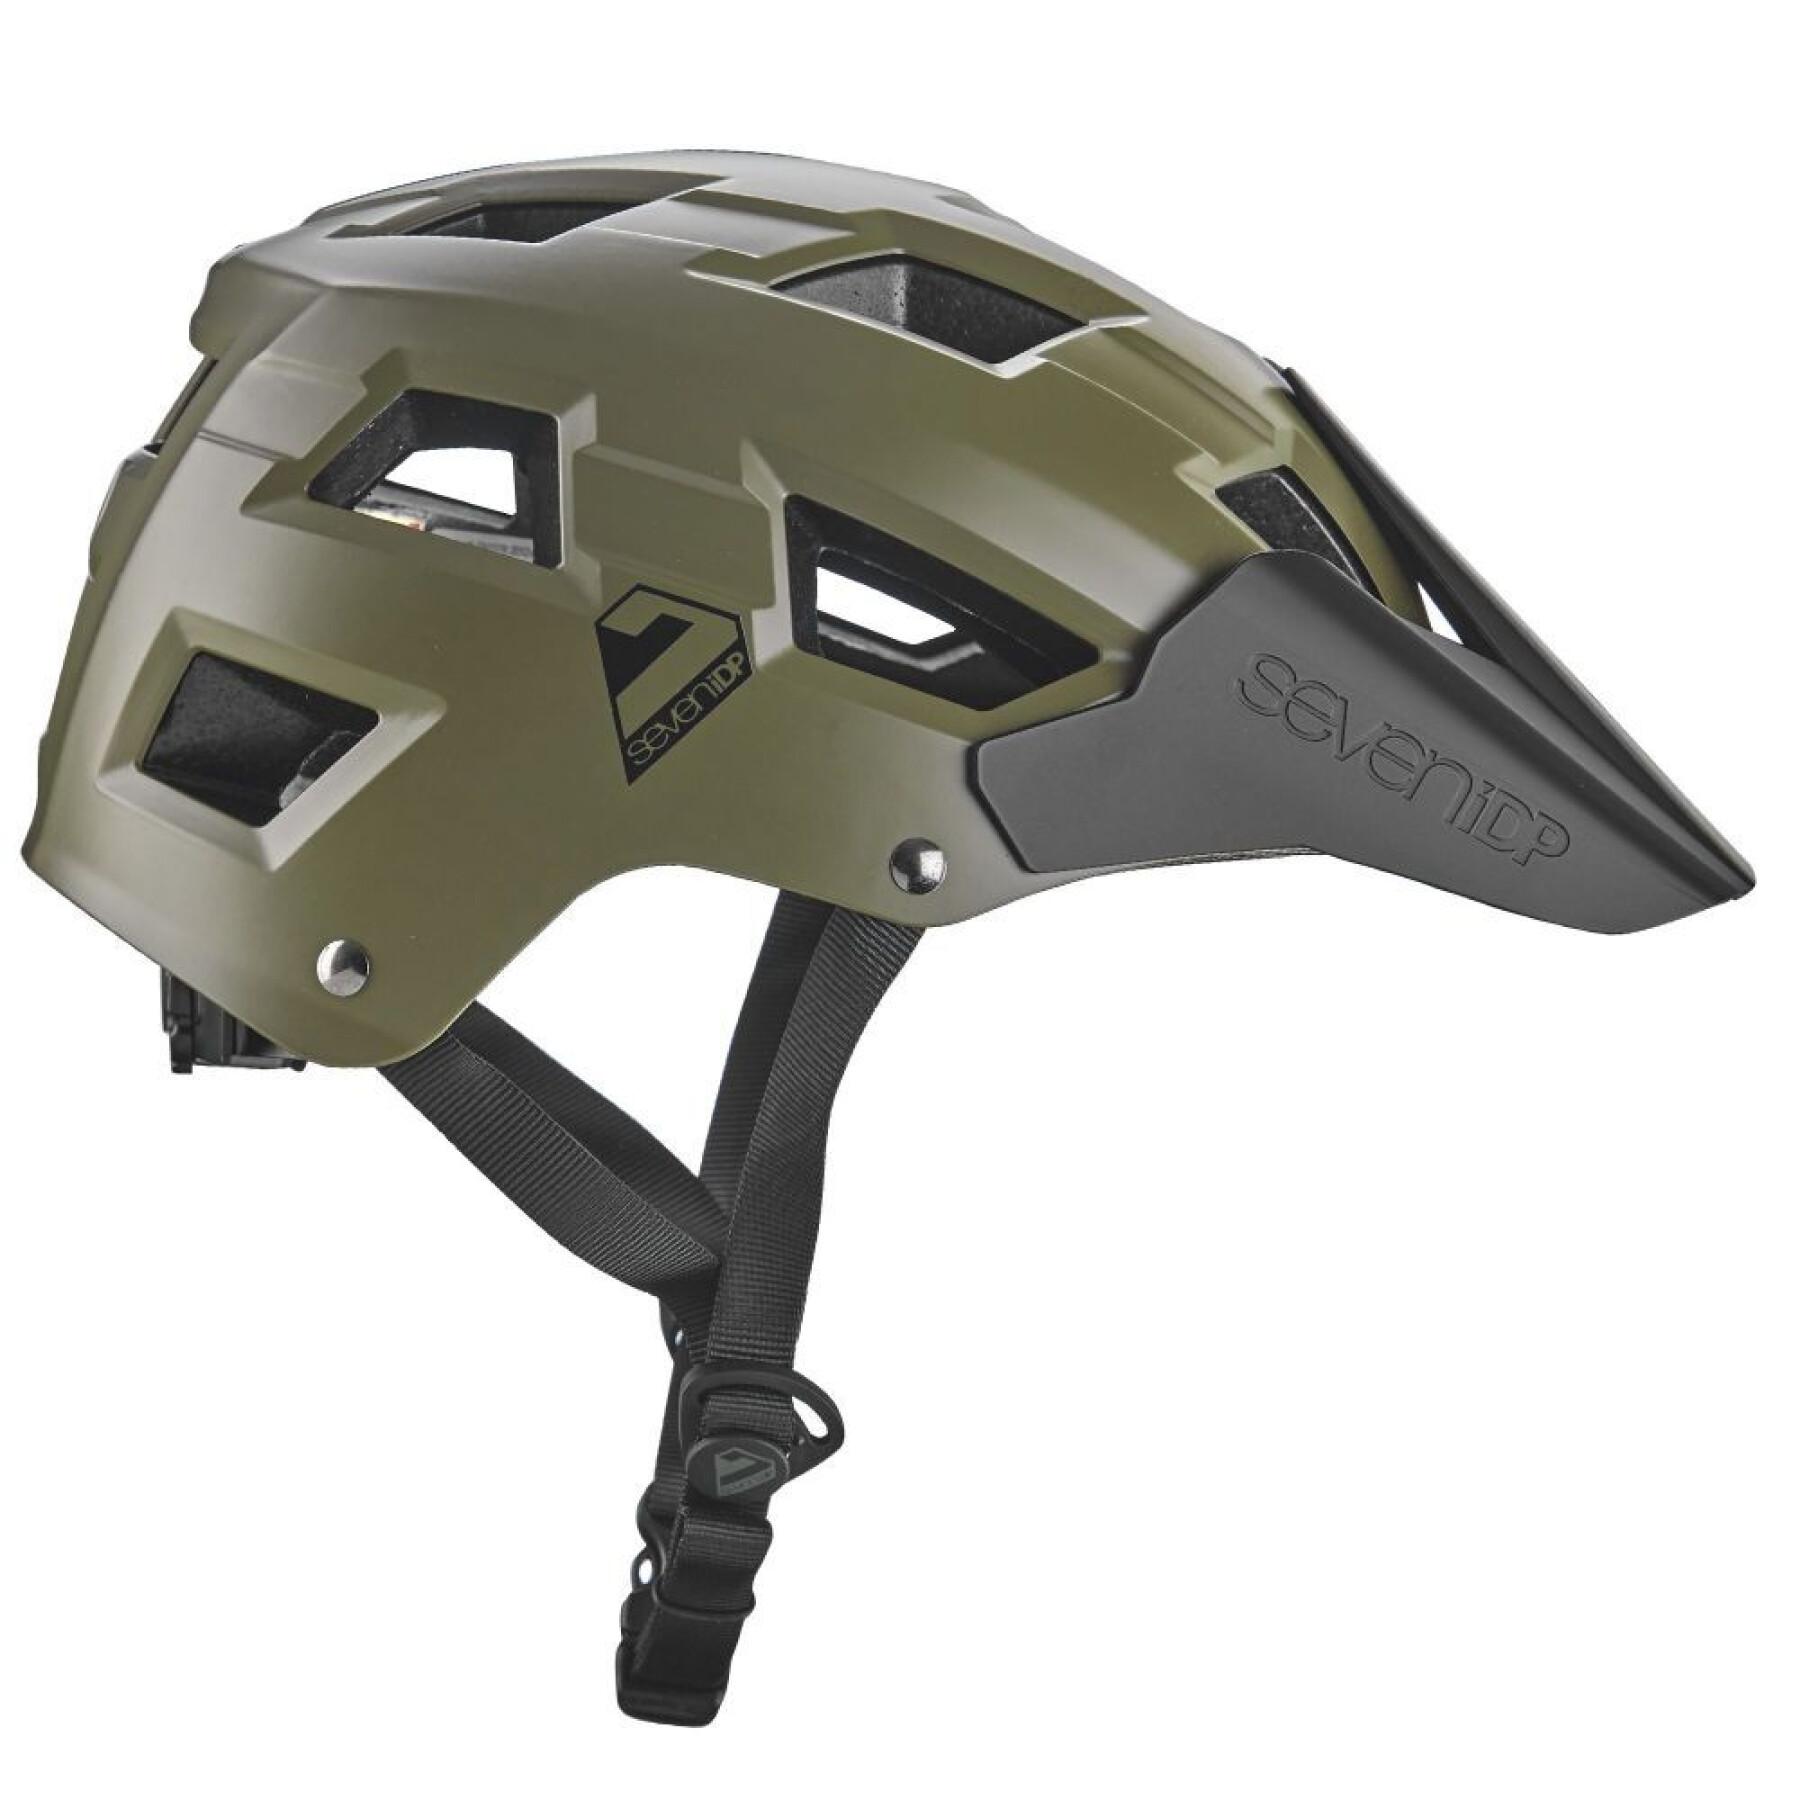 MTB-Helm Seven M2